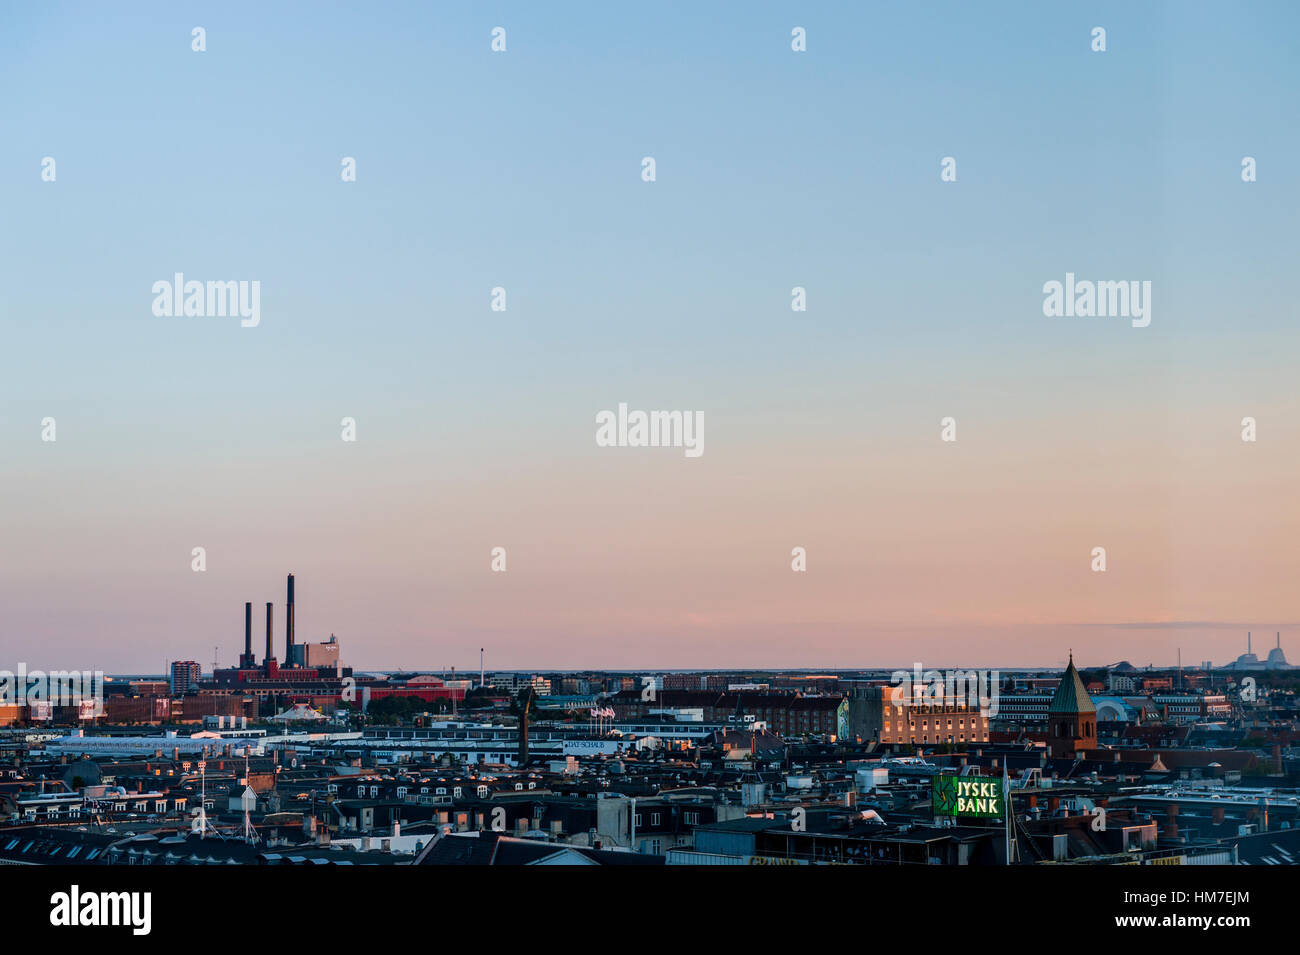 Factory chimneys rise above the flat city skyline of Copenhagen at sunset. Stock Photo